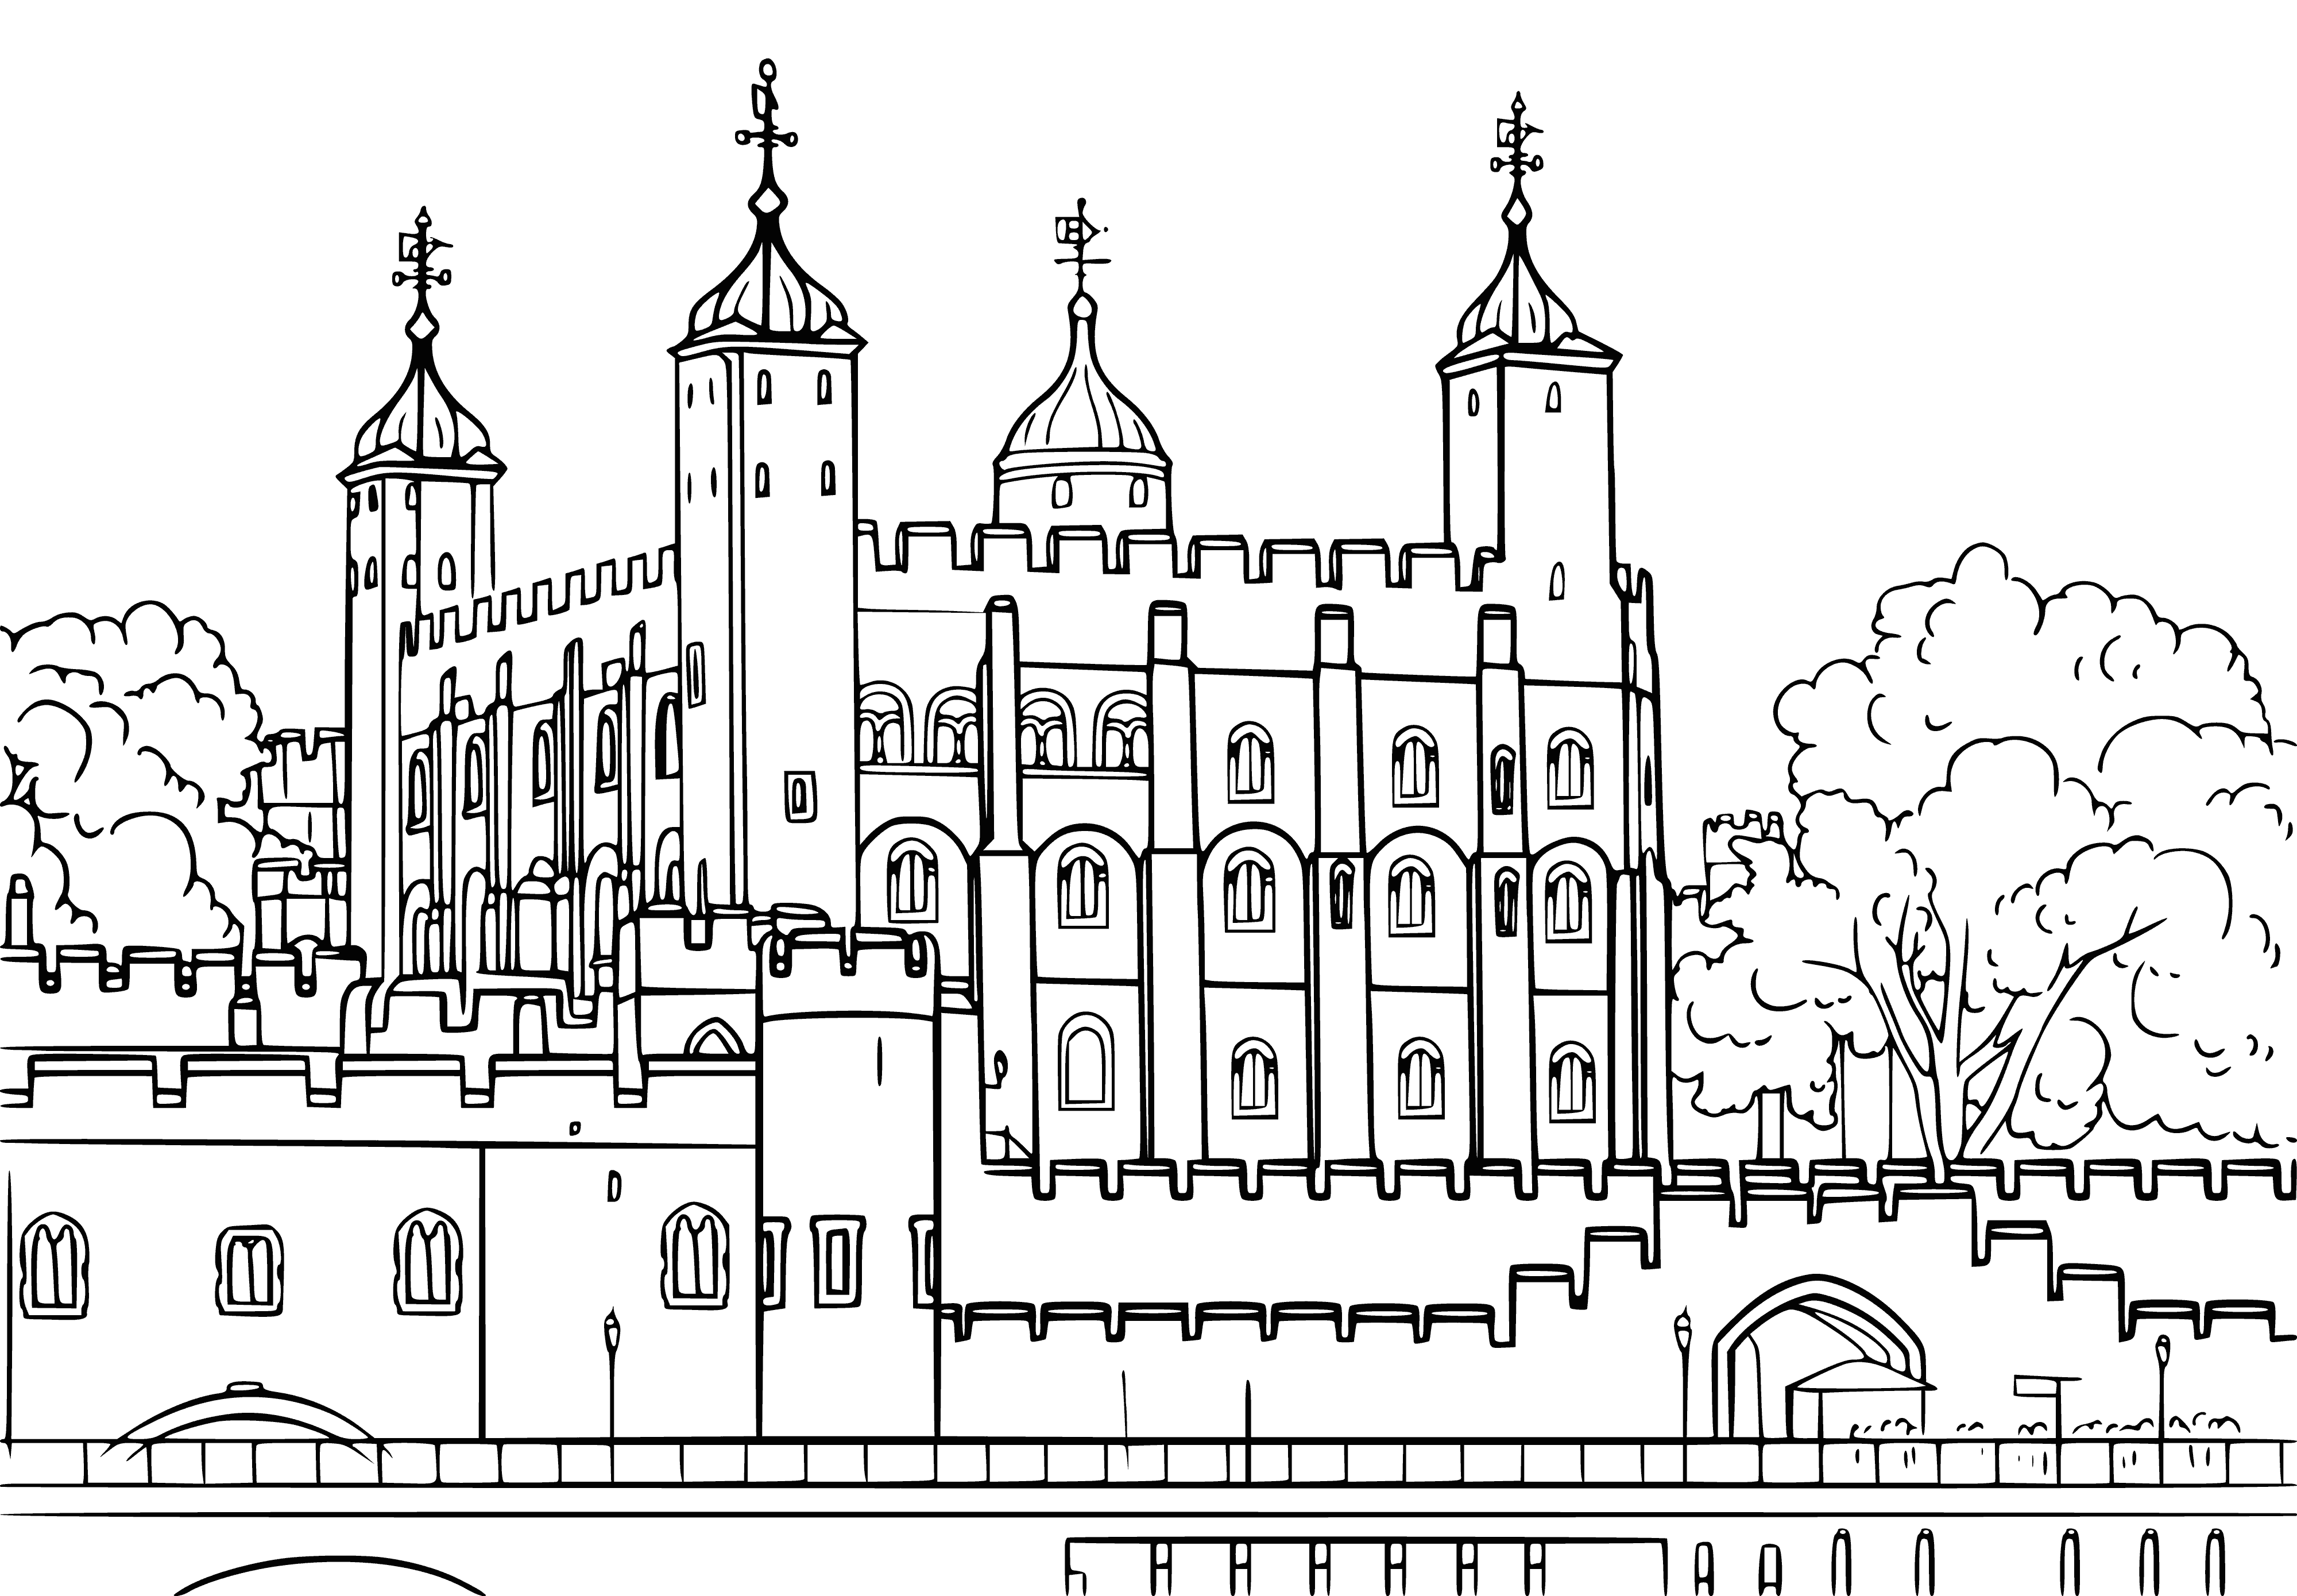 Tower of London. England Malseite